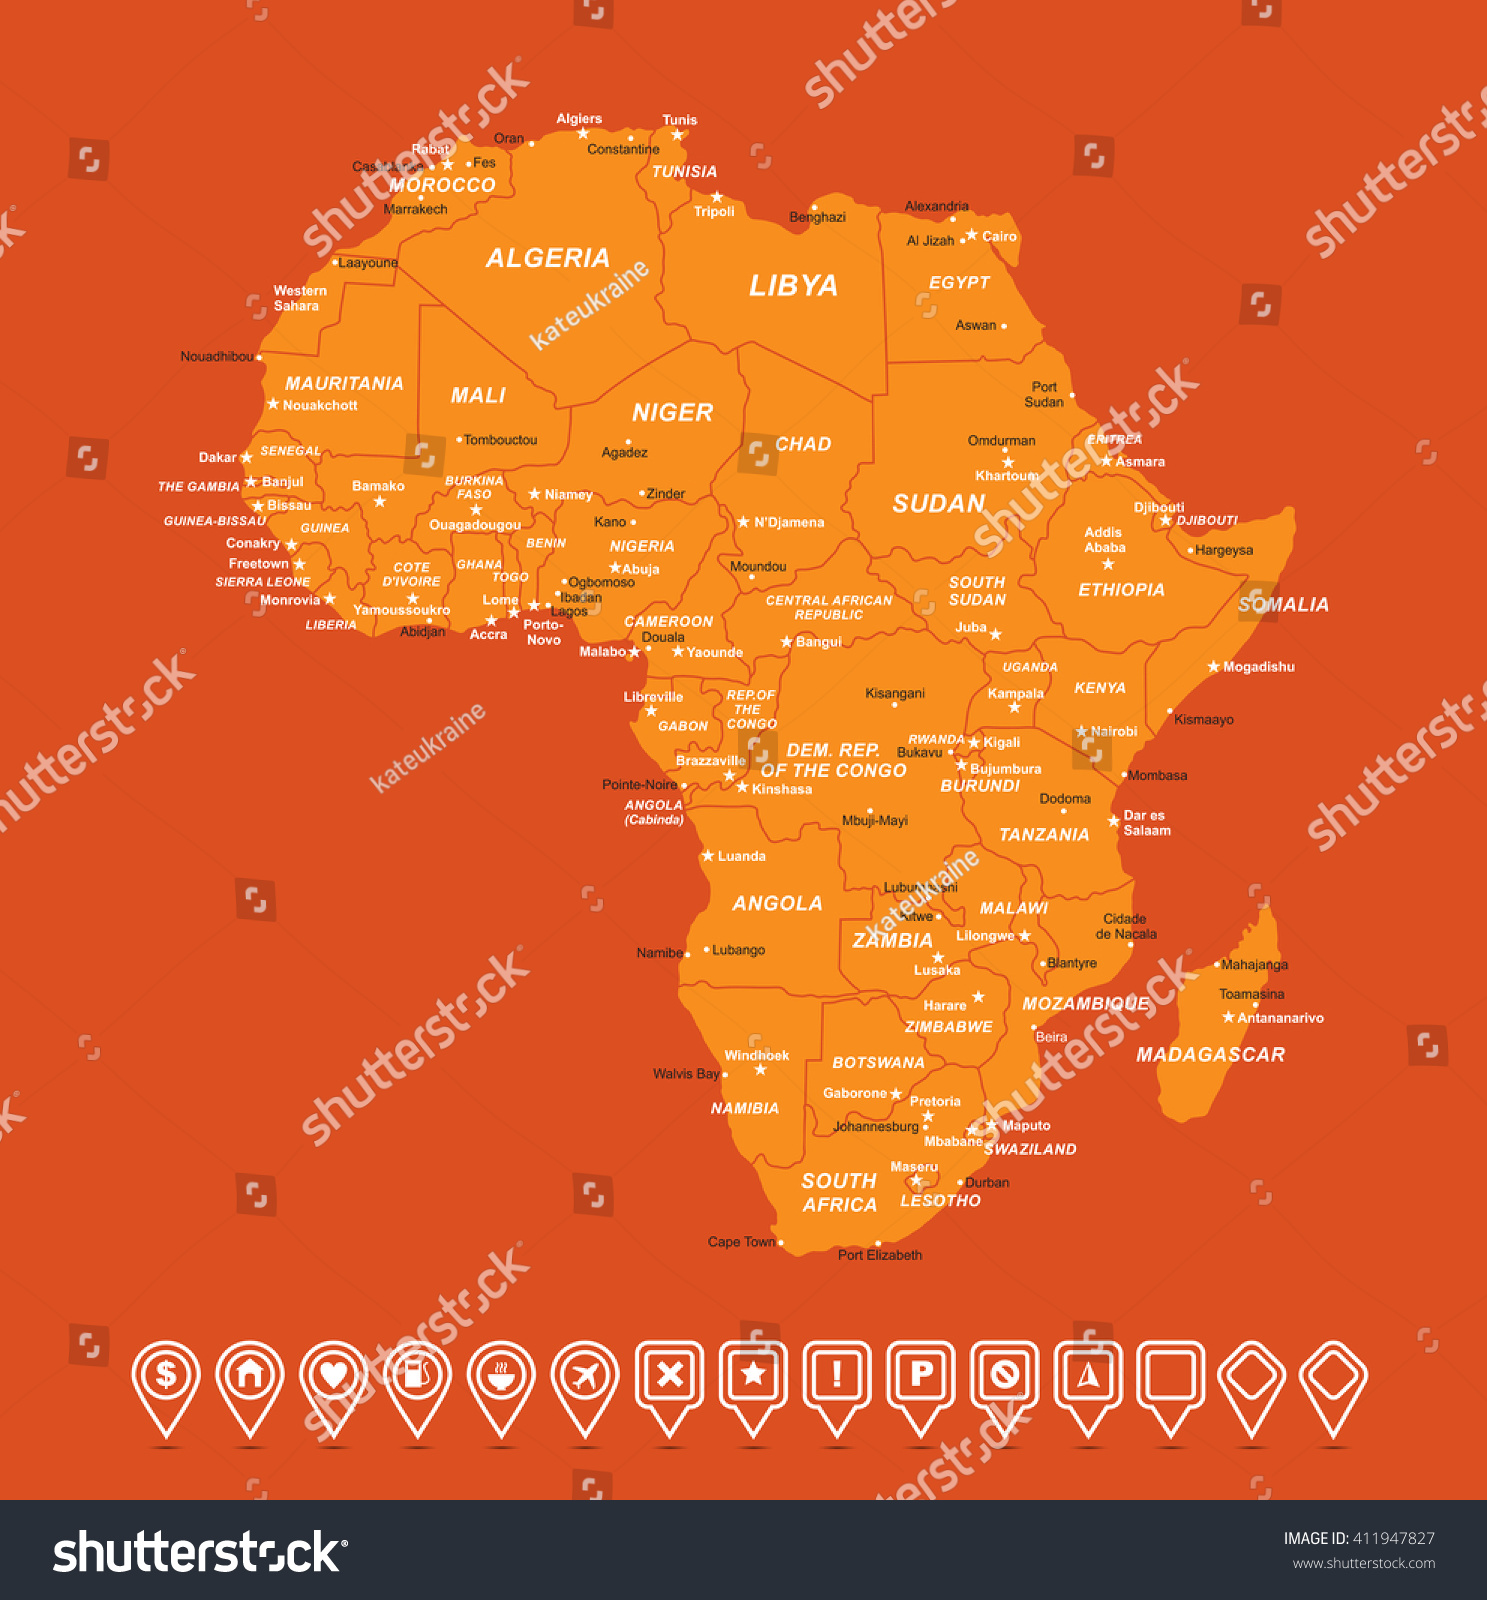 Africa Map Vector Illustration Stock Vector Royalty Free 411947827 Shutterstock 4679